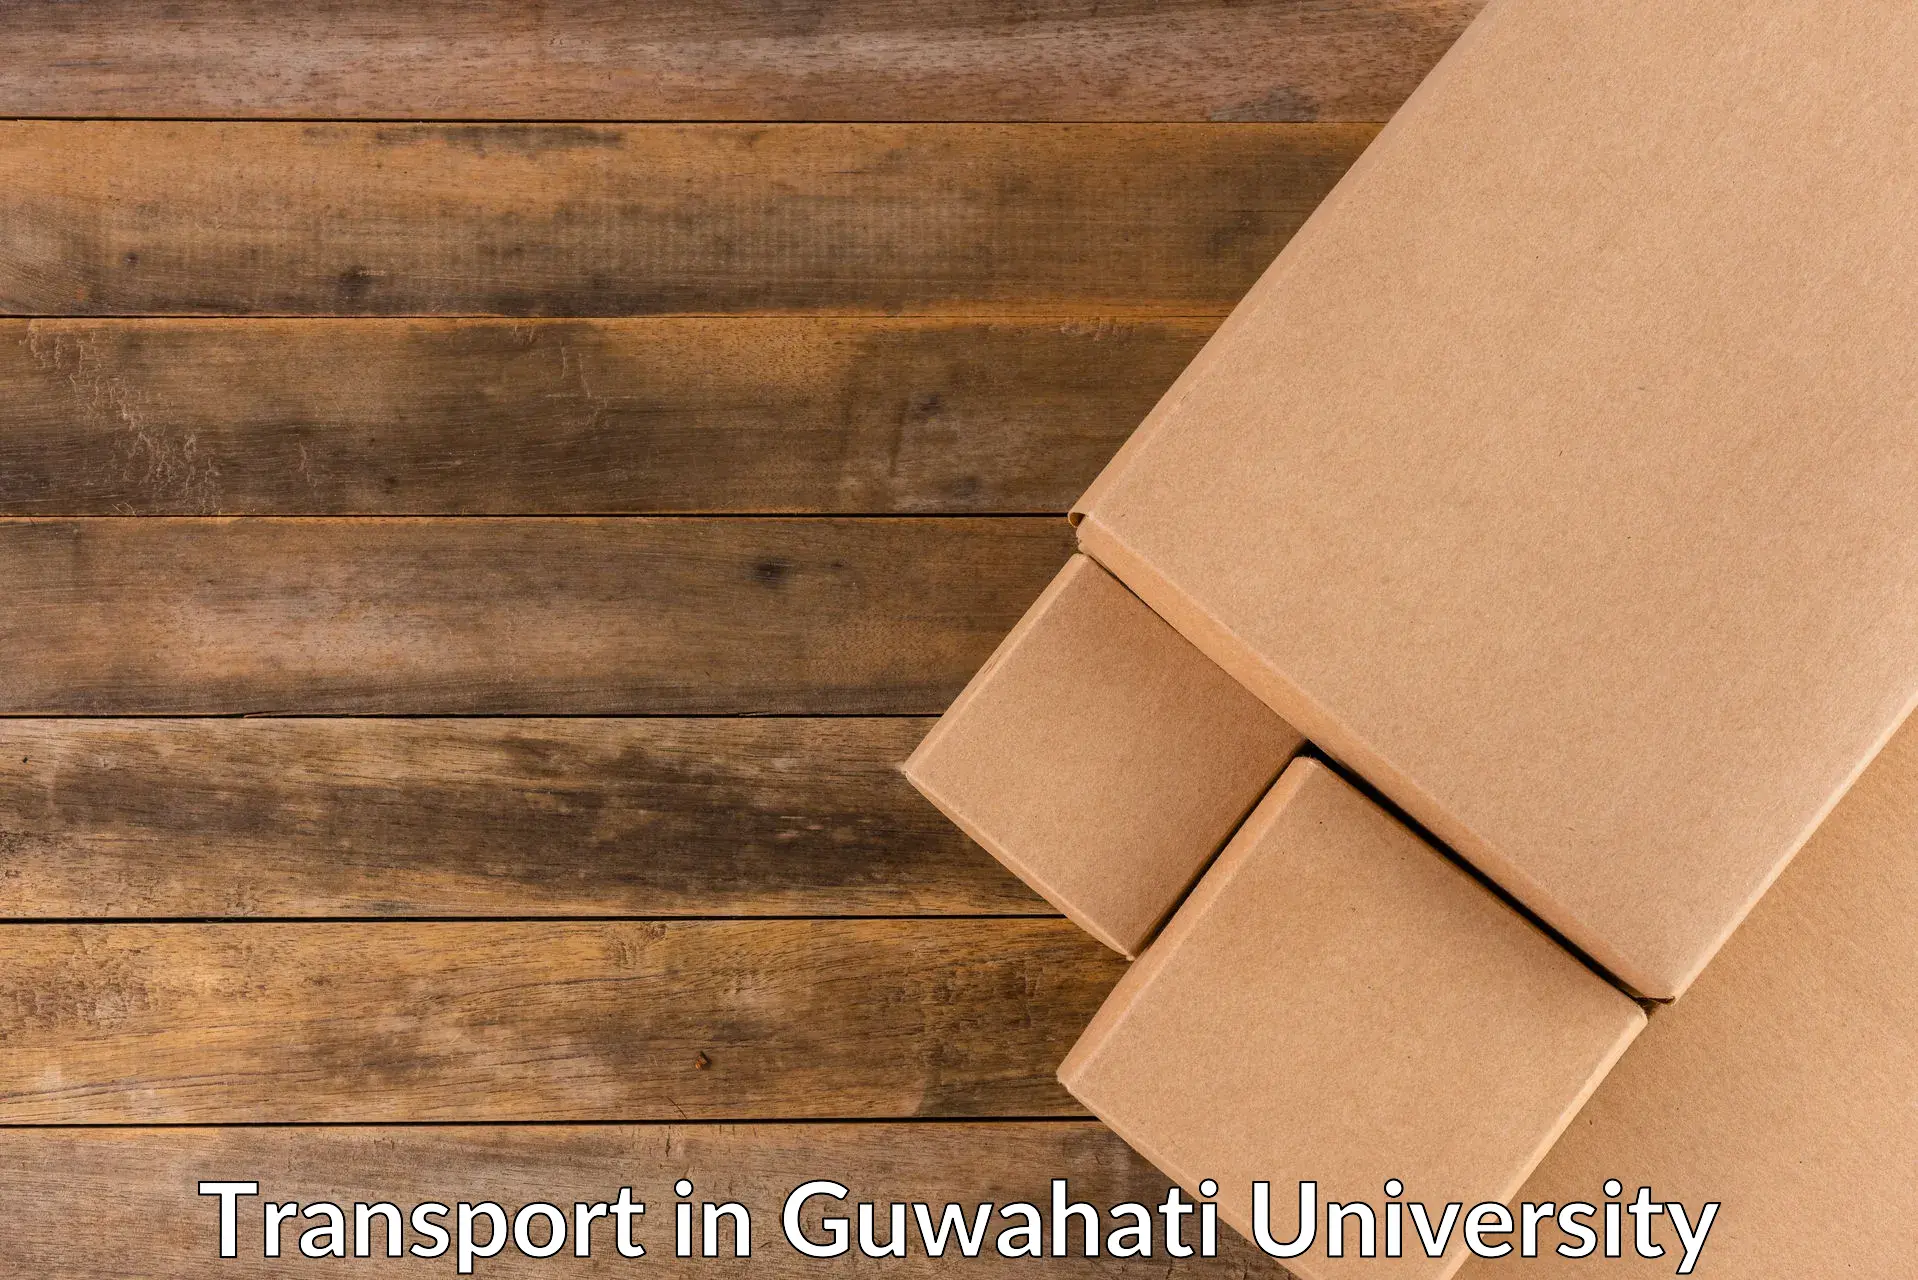 Transport services in Guwahati University